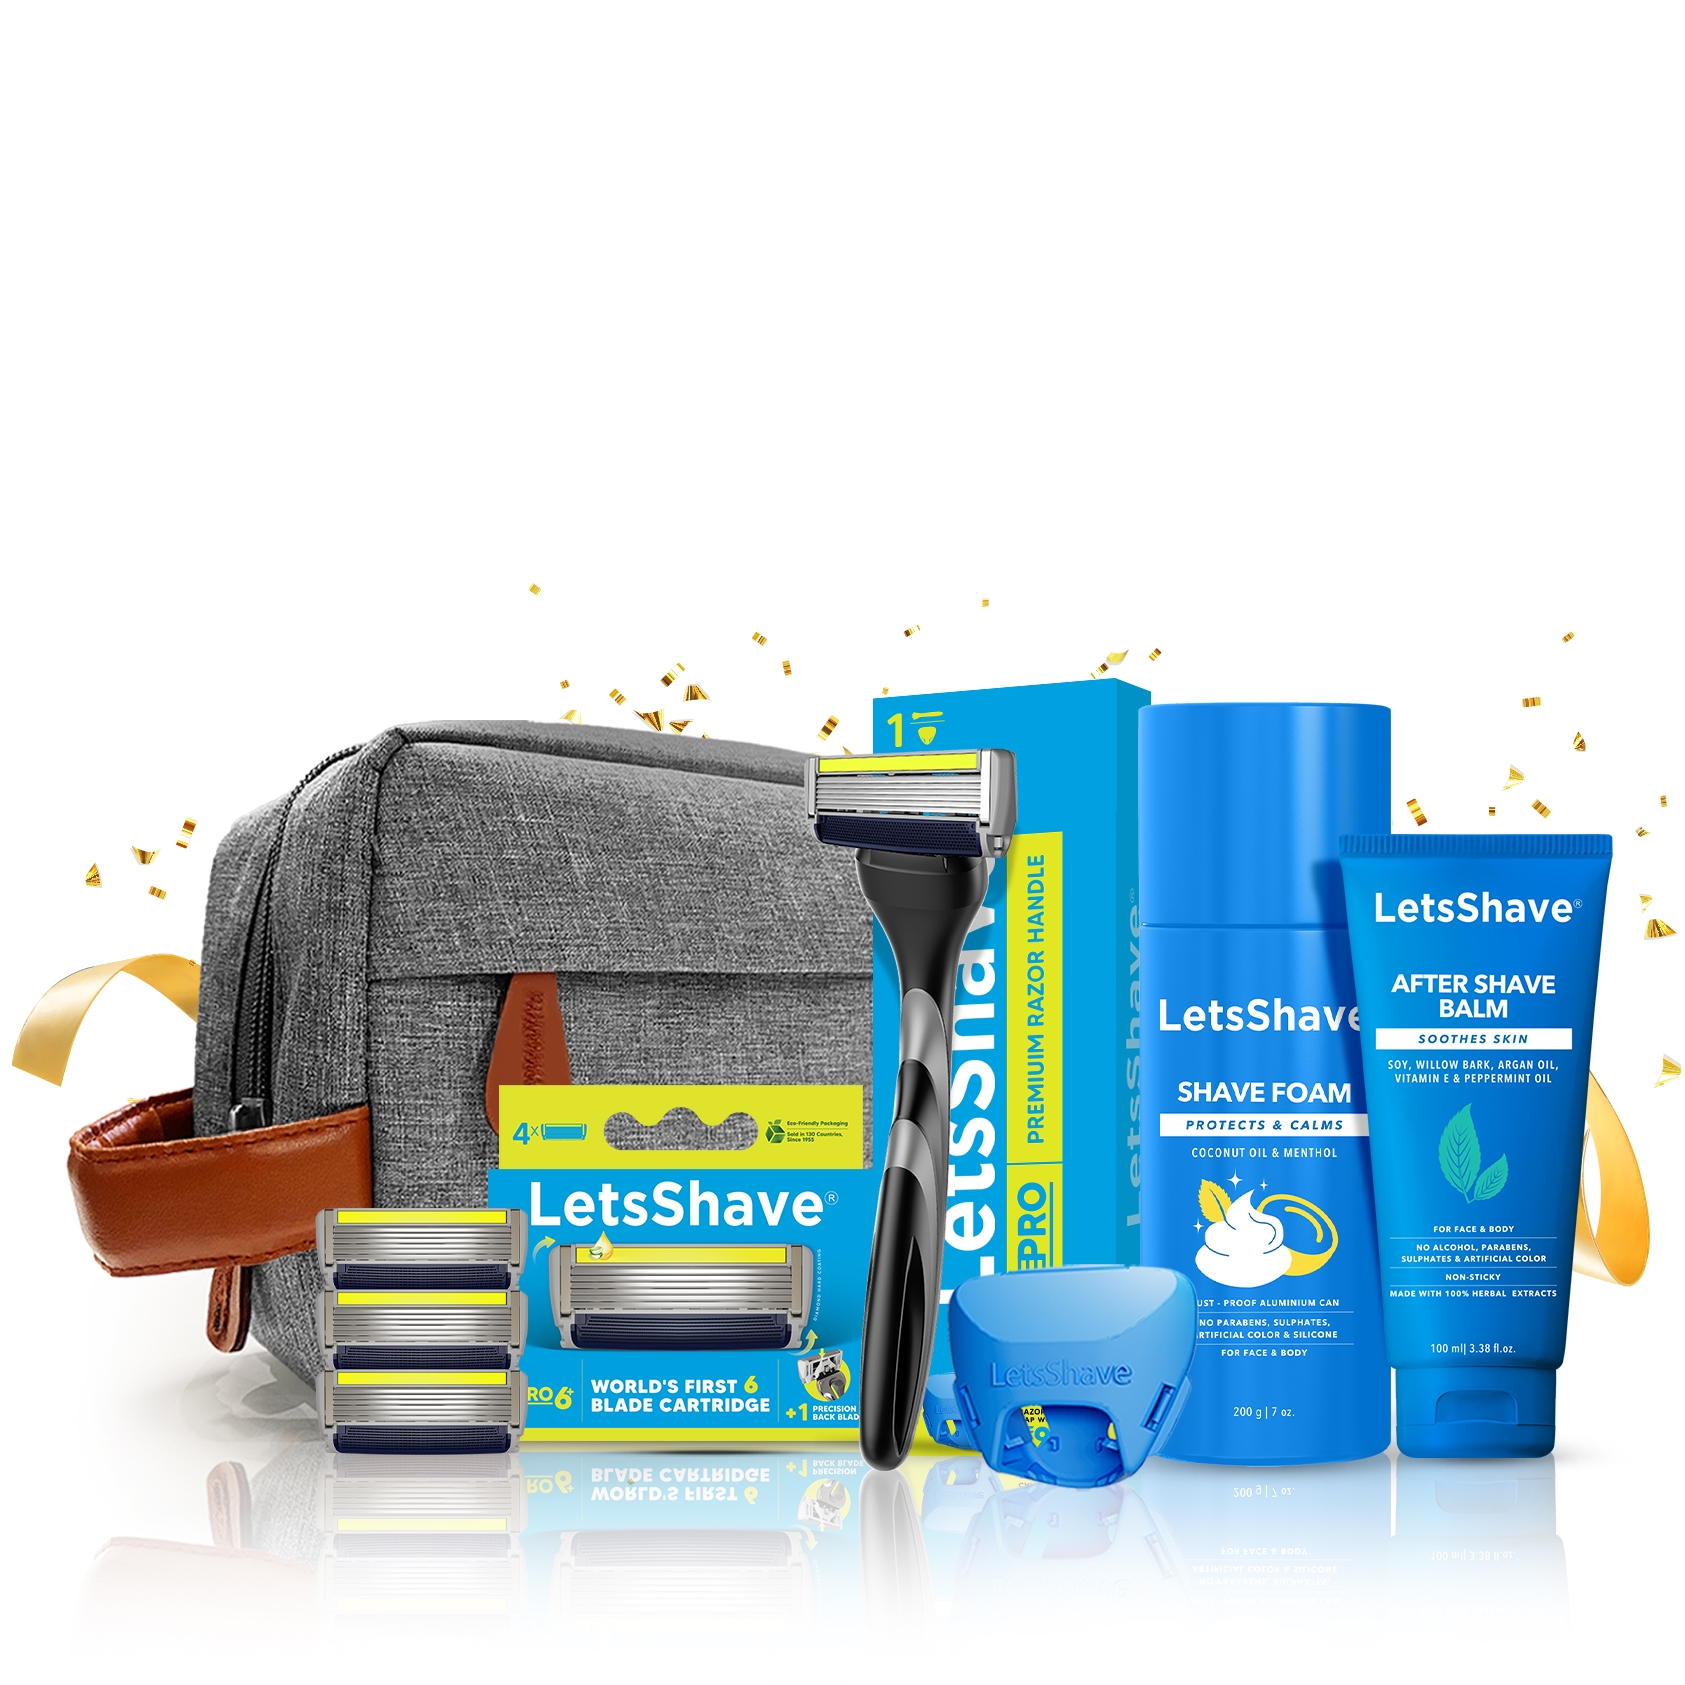 LetsShave | LetsShave Pro 6 Plus Premium Gift Set - Pack of 4 Pro 6 Plus Blades + Razor Handle + Shave Foam - 200g + After Shave Balm + Travel Bag + Travel Cap 0